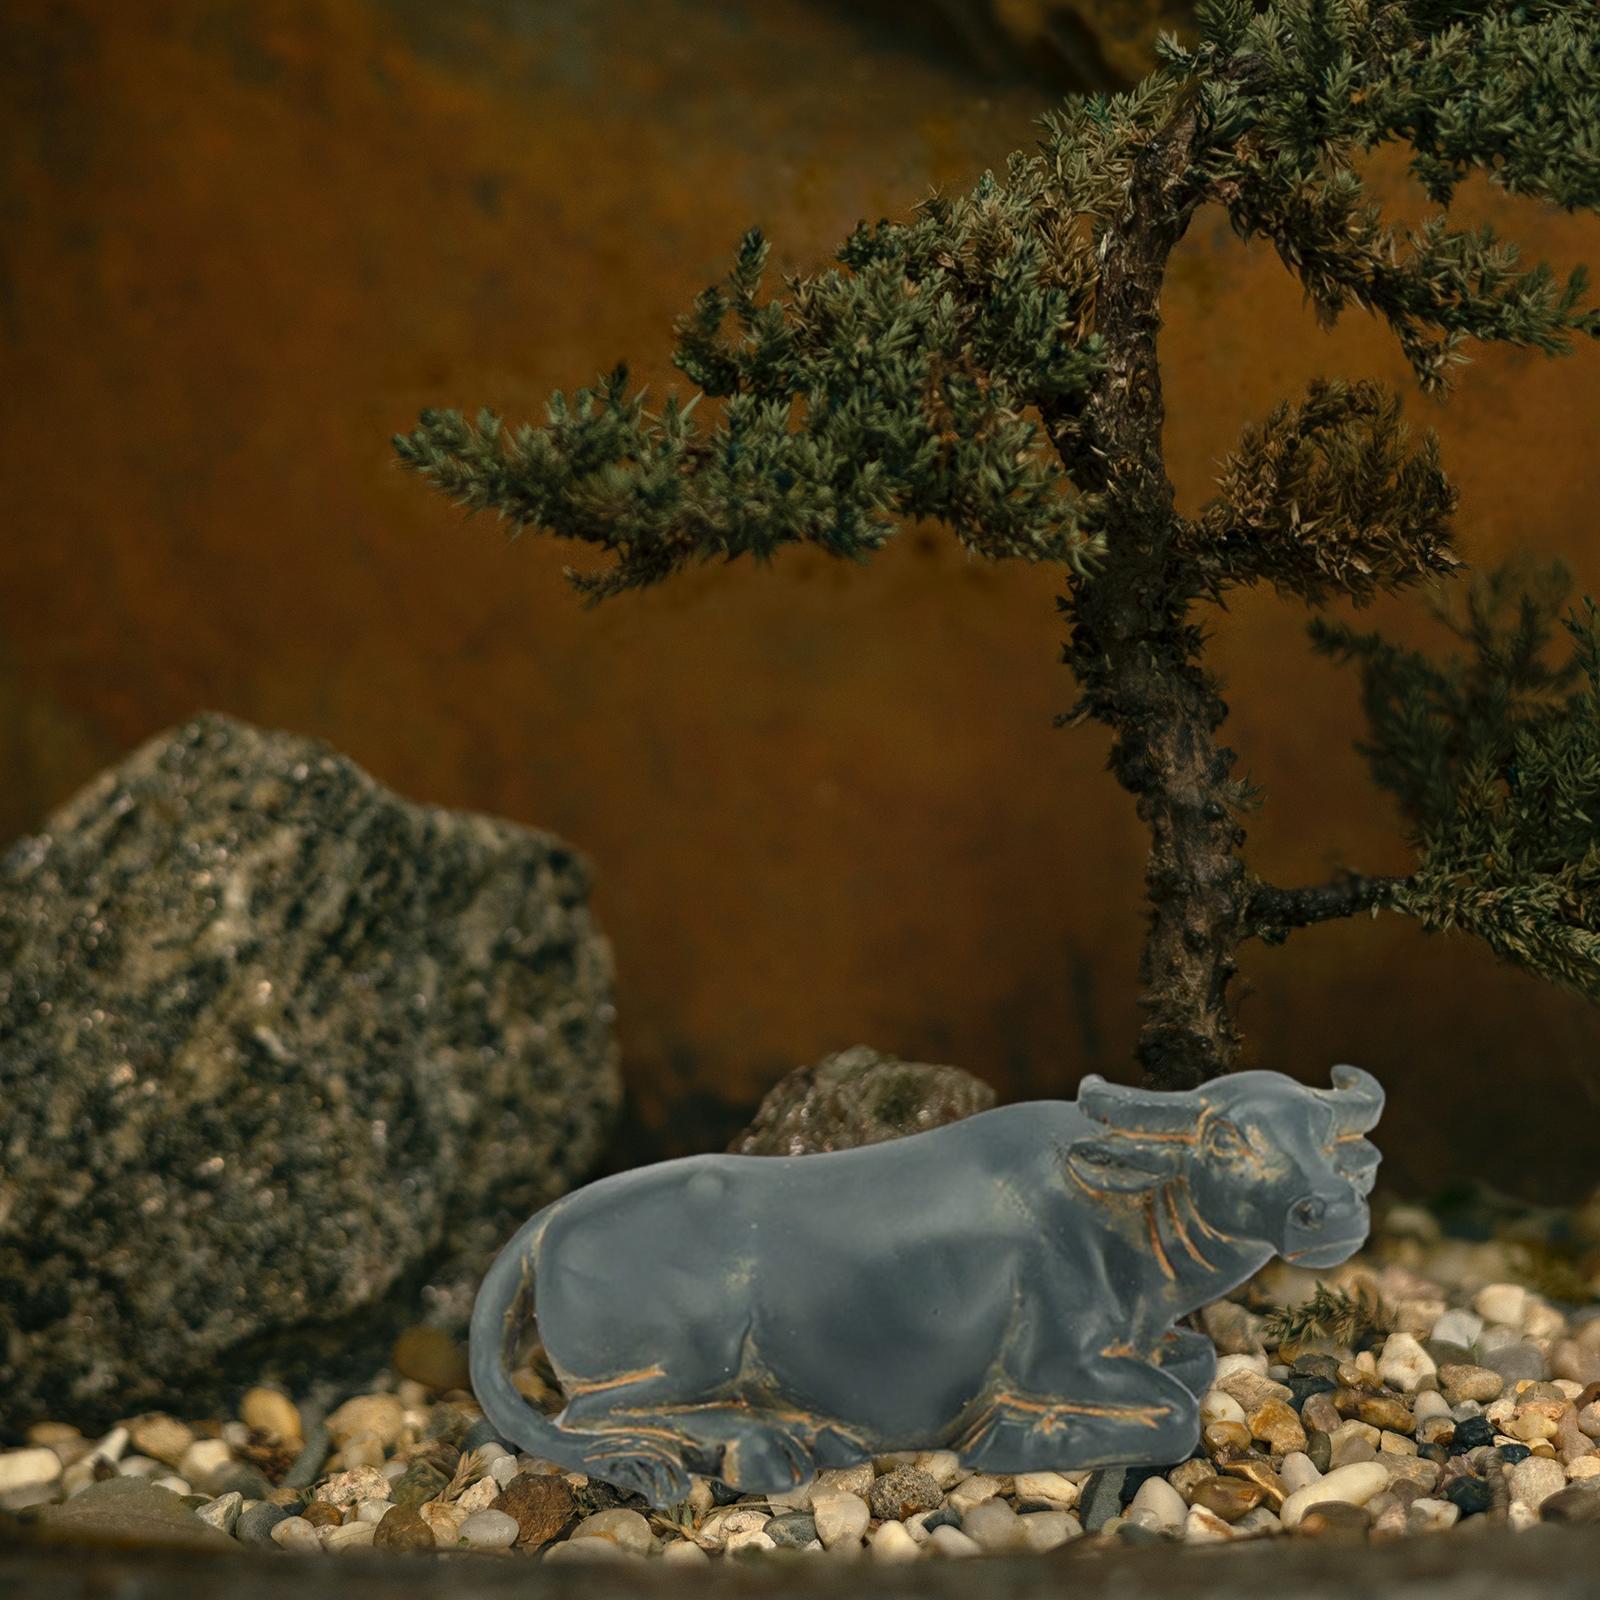 Miniature Buffalo Figurine Craft Buffalo Statue for Office Corridor Tabletop